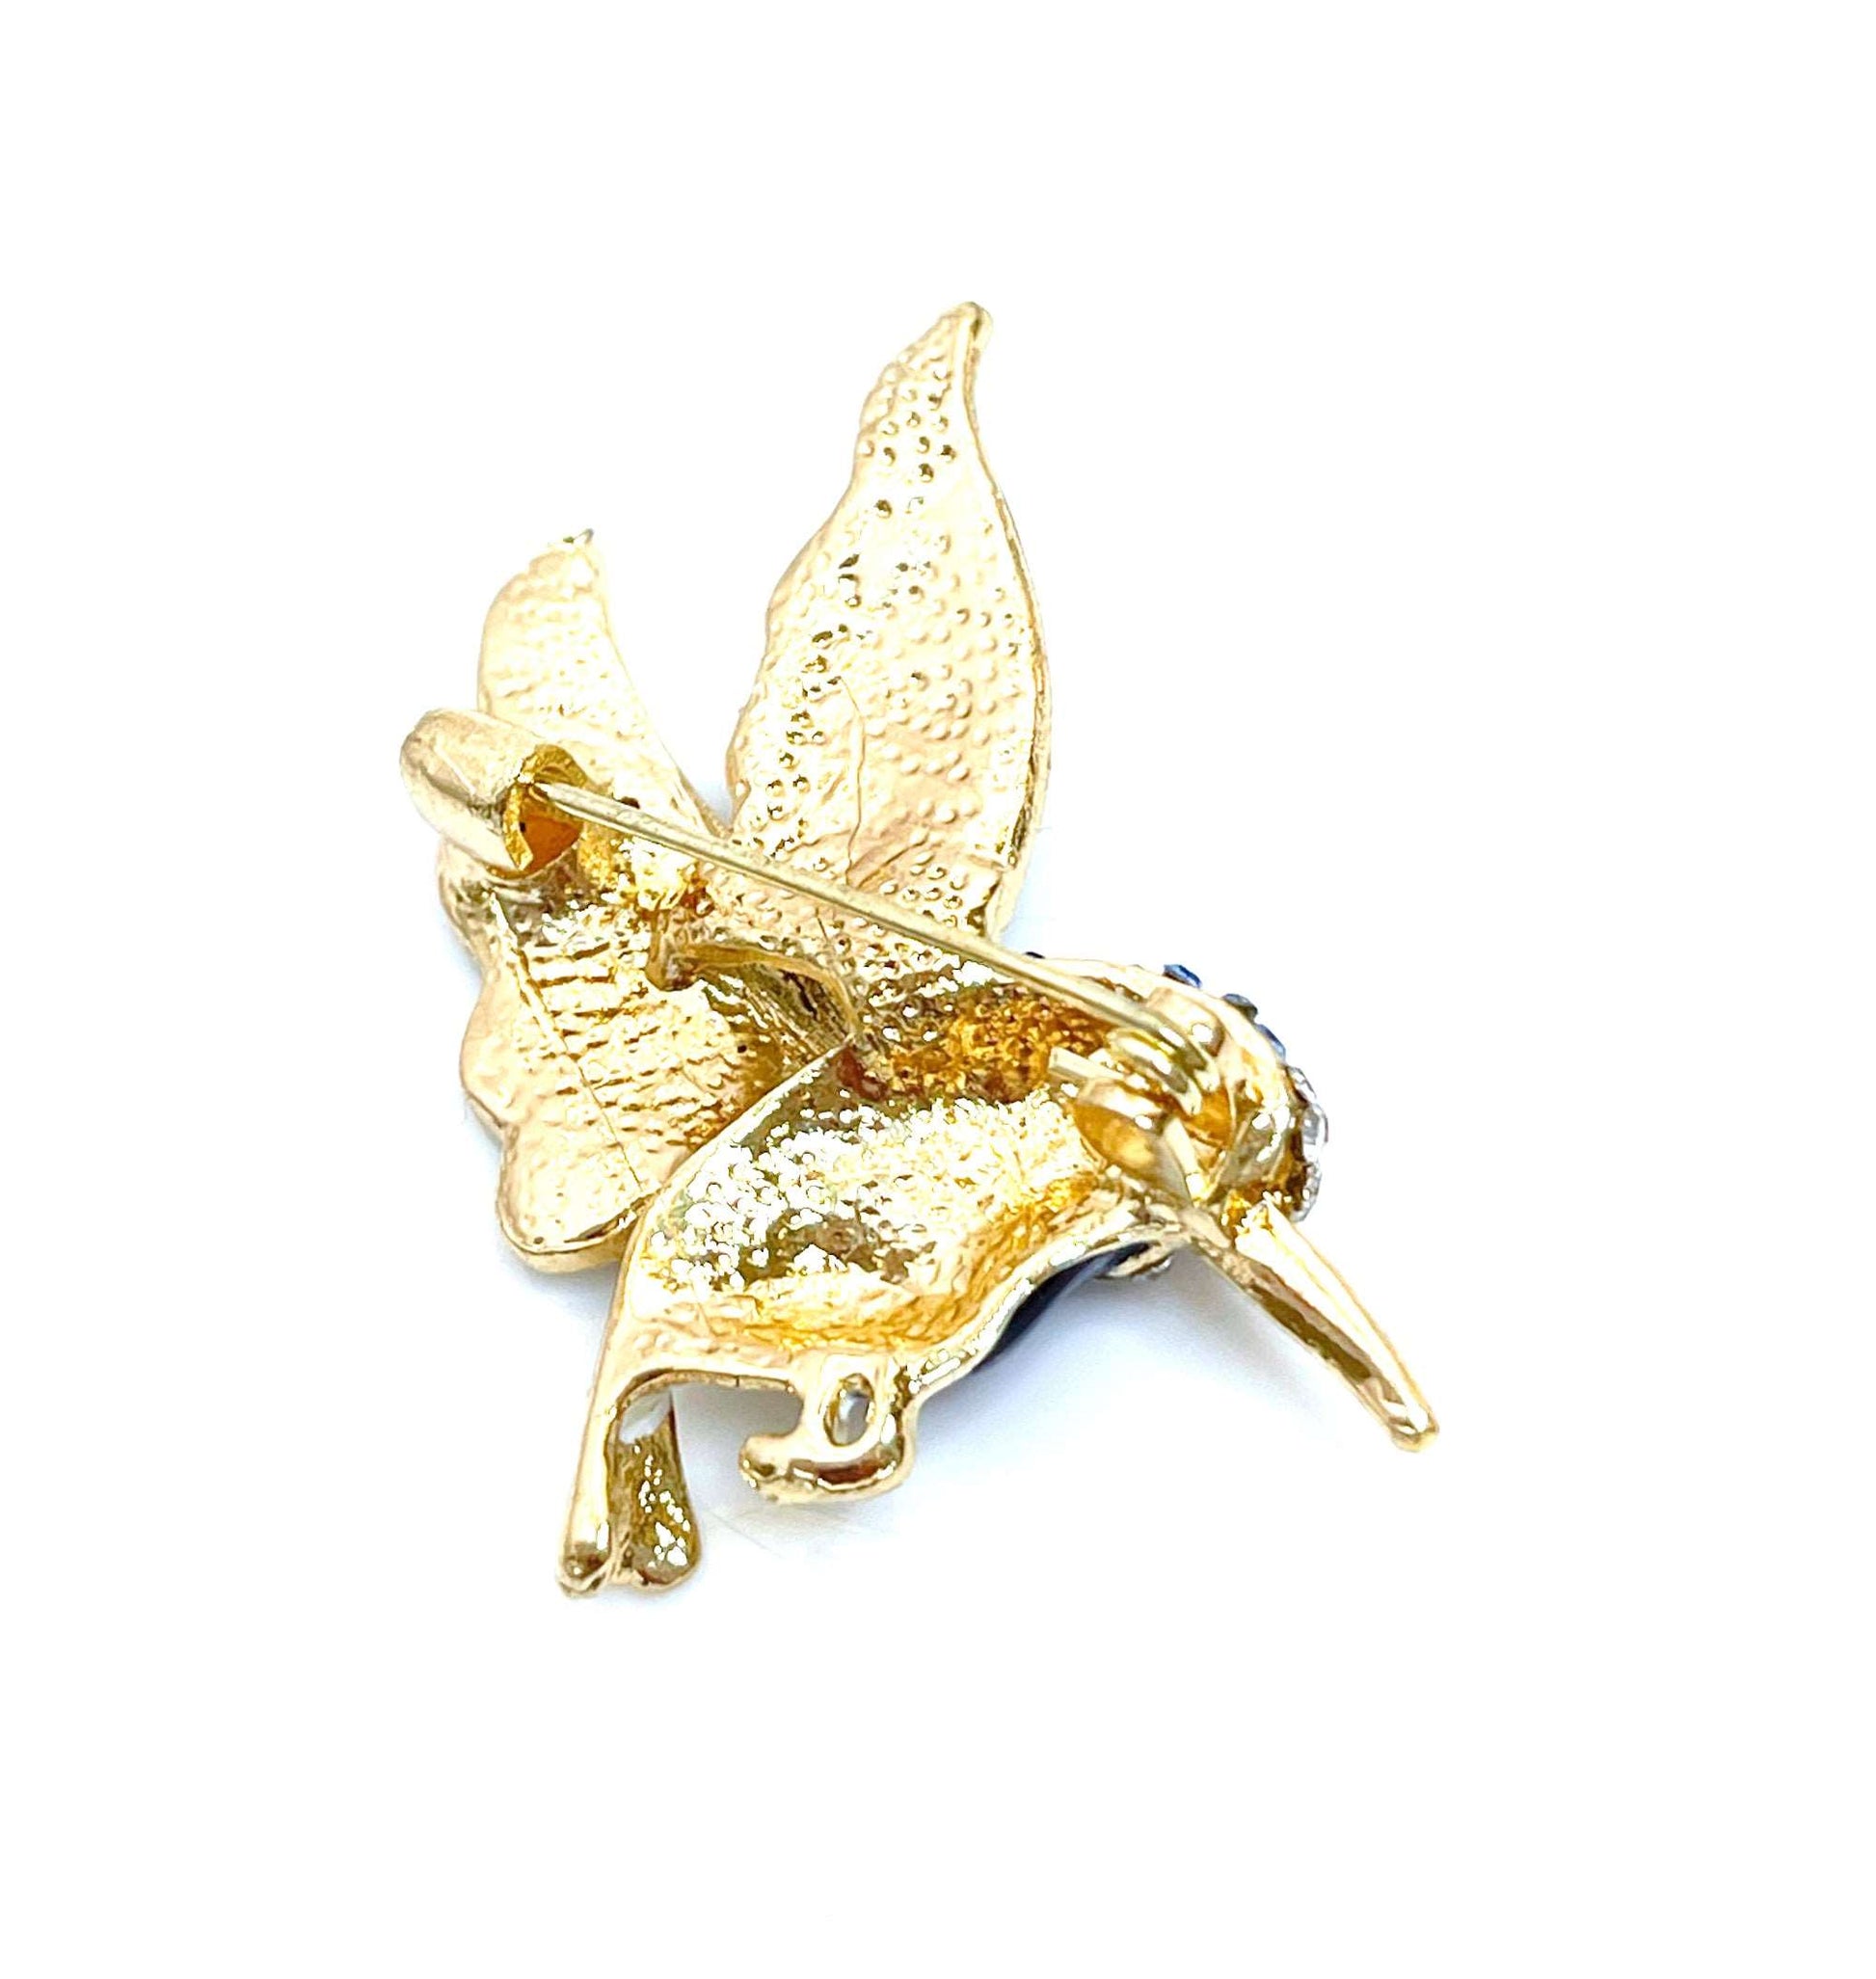 Hummingbird Brooch | Gift for Bird Lovers | Black and Gold Hummingbird | Cute Bird Pin